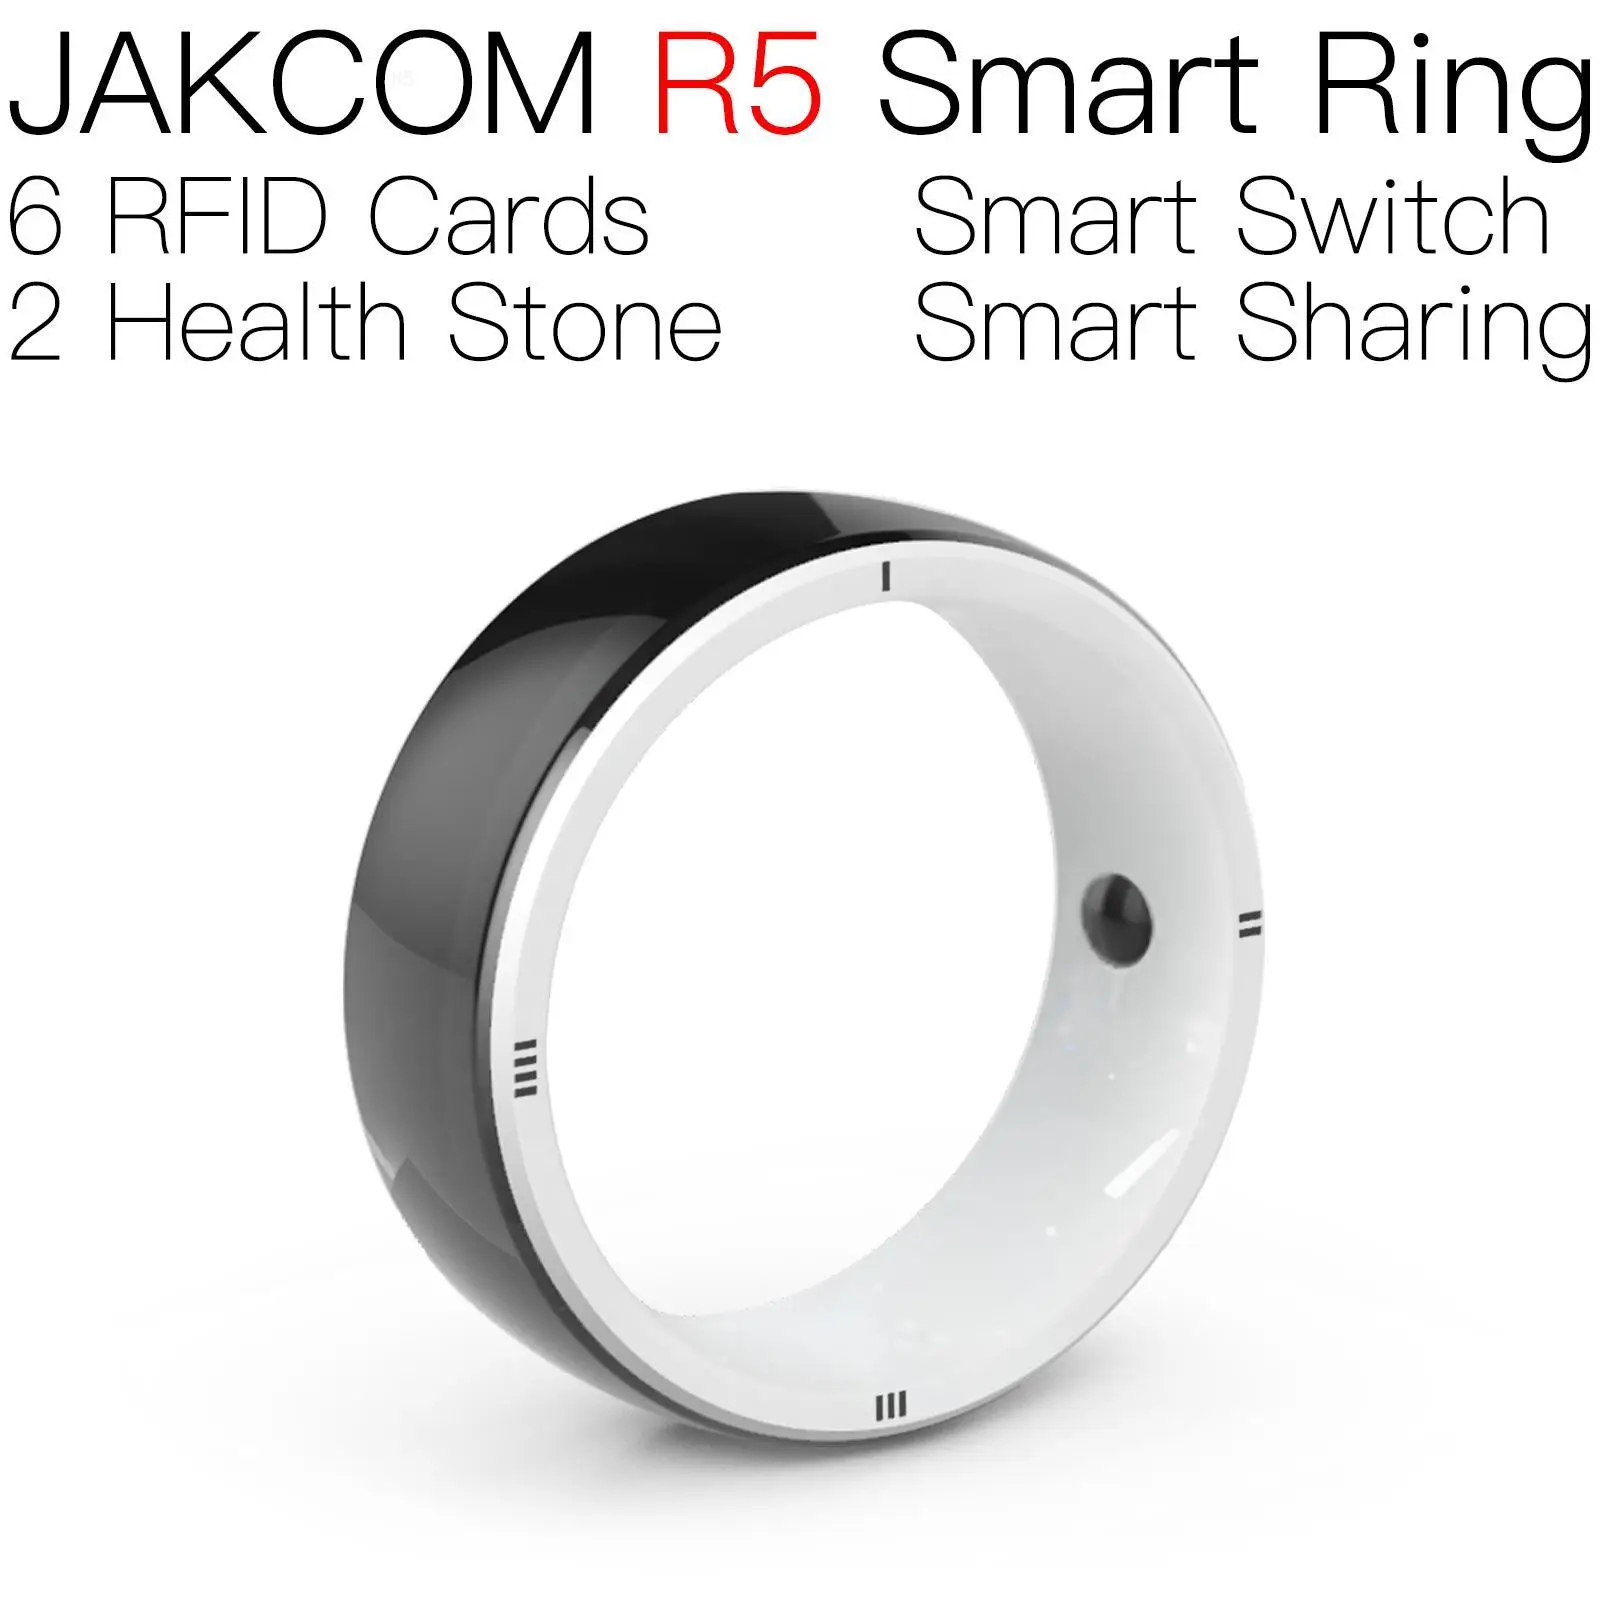 

JAKCOM R5 Smart Ring For men women cart token rfid anti metal sticker uid tag mini palomas carreras benzing 2 rupees items